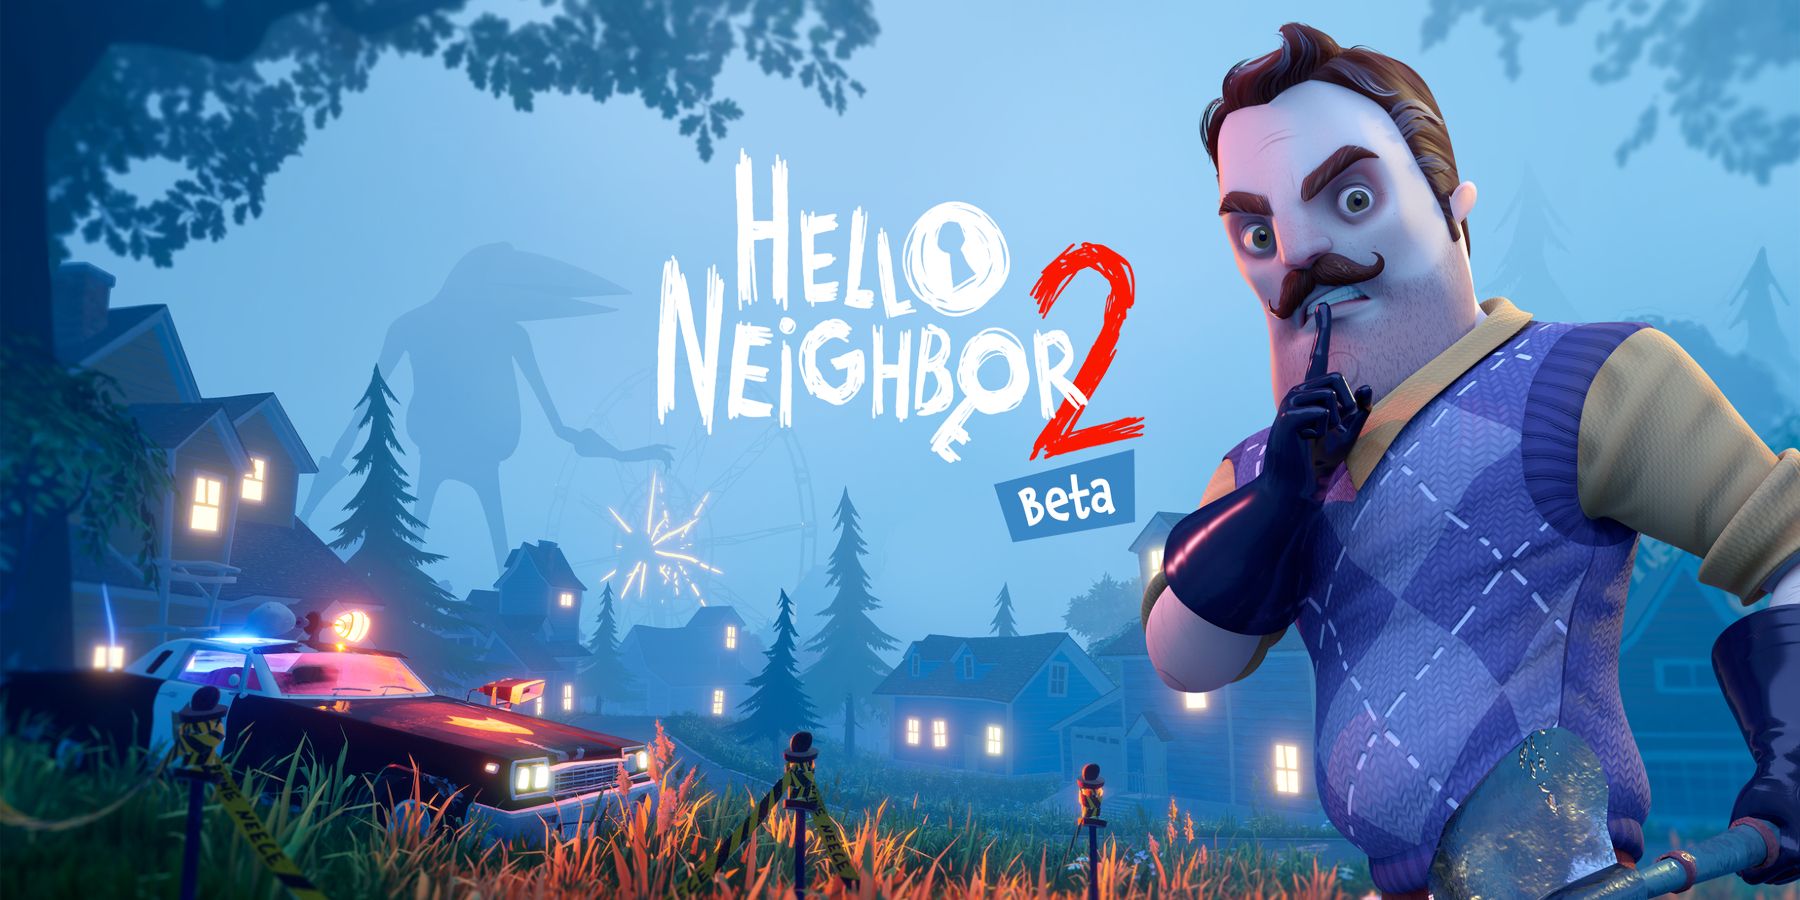 Hello Neighbor Hide and Seek - Nintendo Switch Releases - NintendoReporters